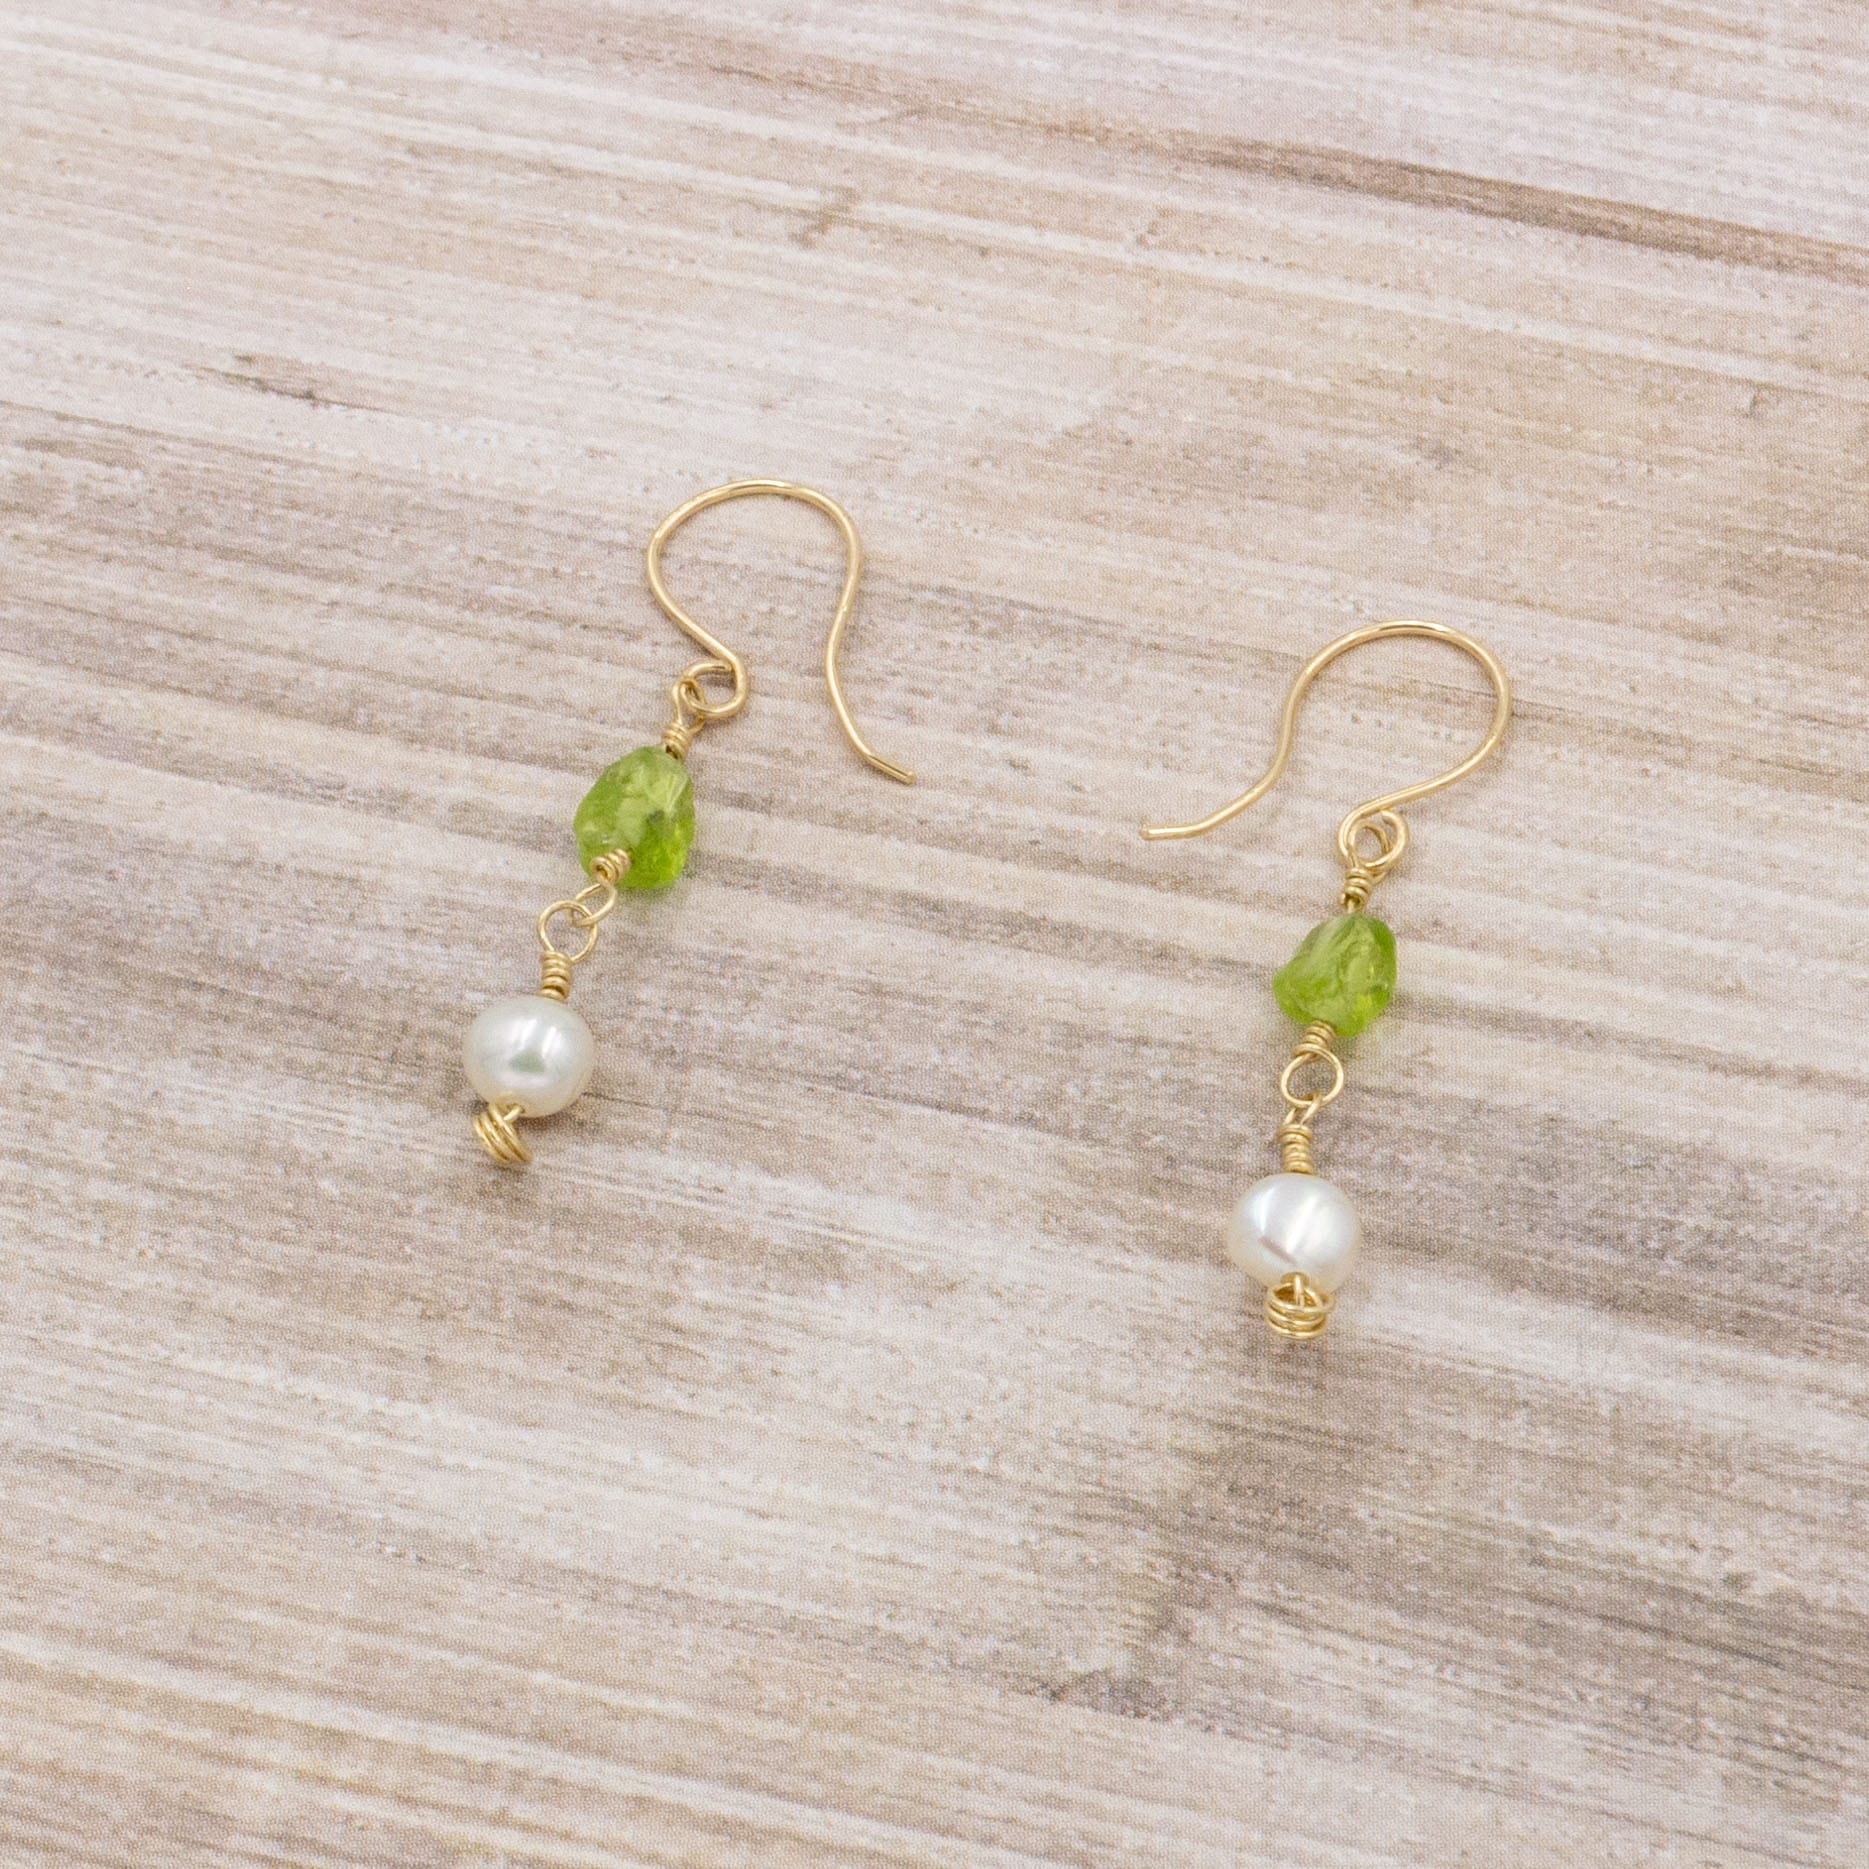 Cheekoo's Handcrafted Natural Peridot Freshwater White Pearl 14K Gold Drop Earrings - August Birthstone